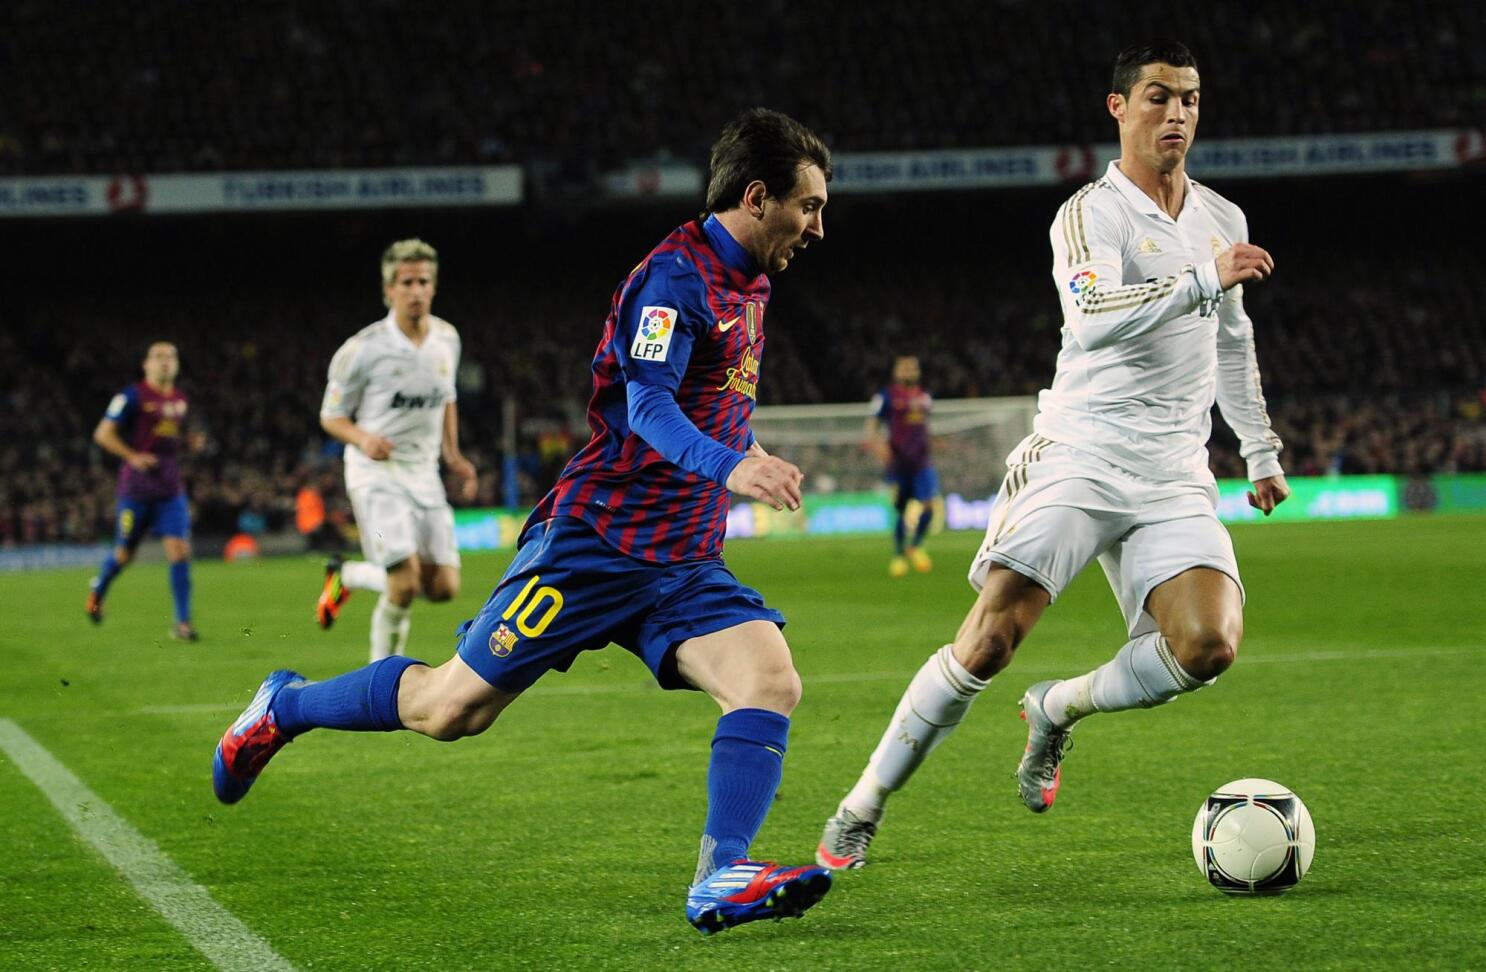 Messi v Ronaldo